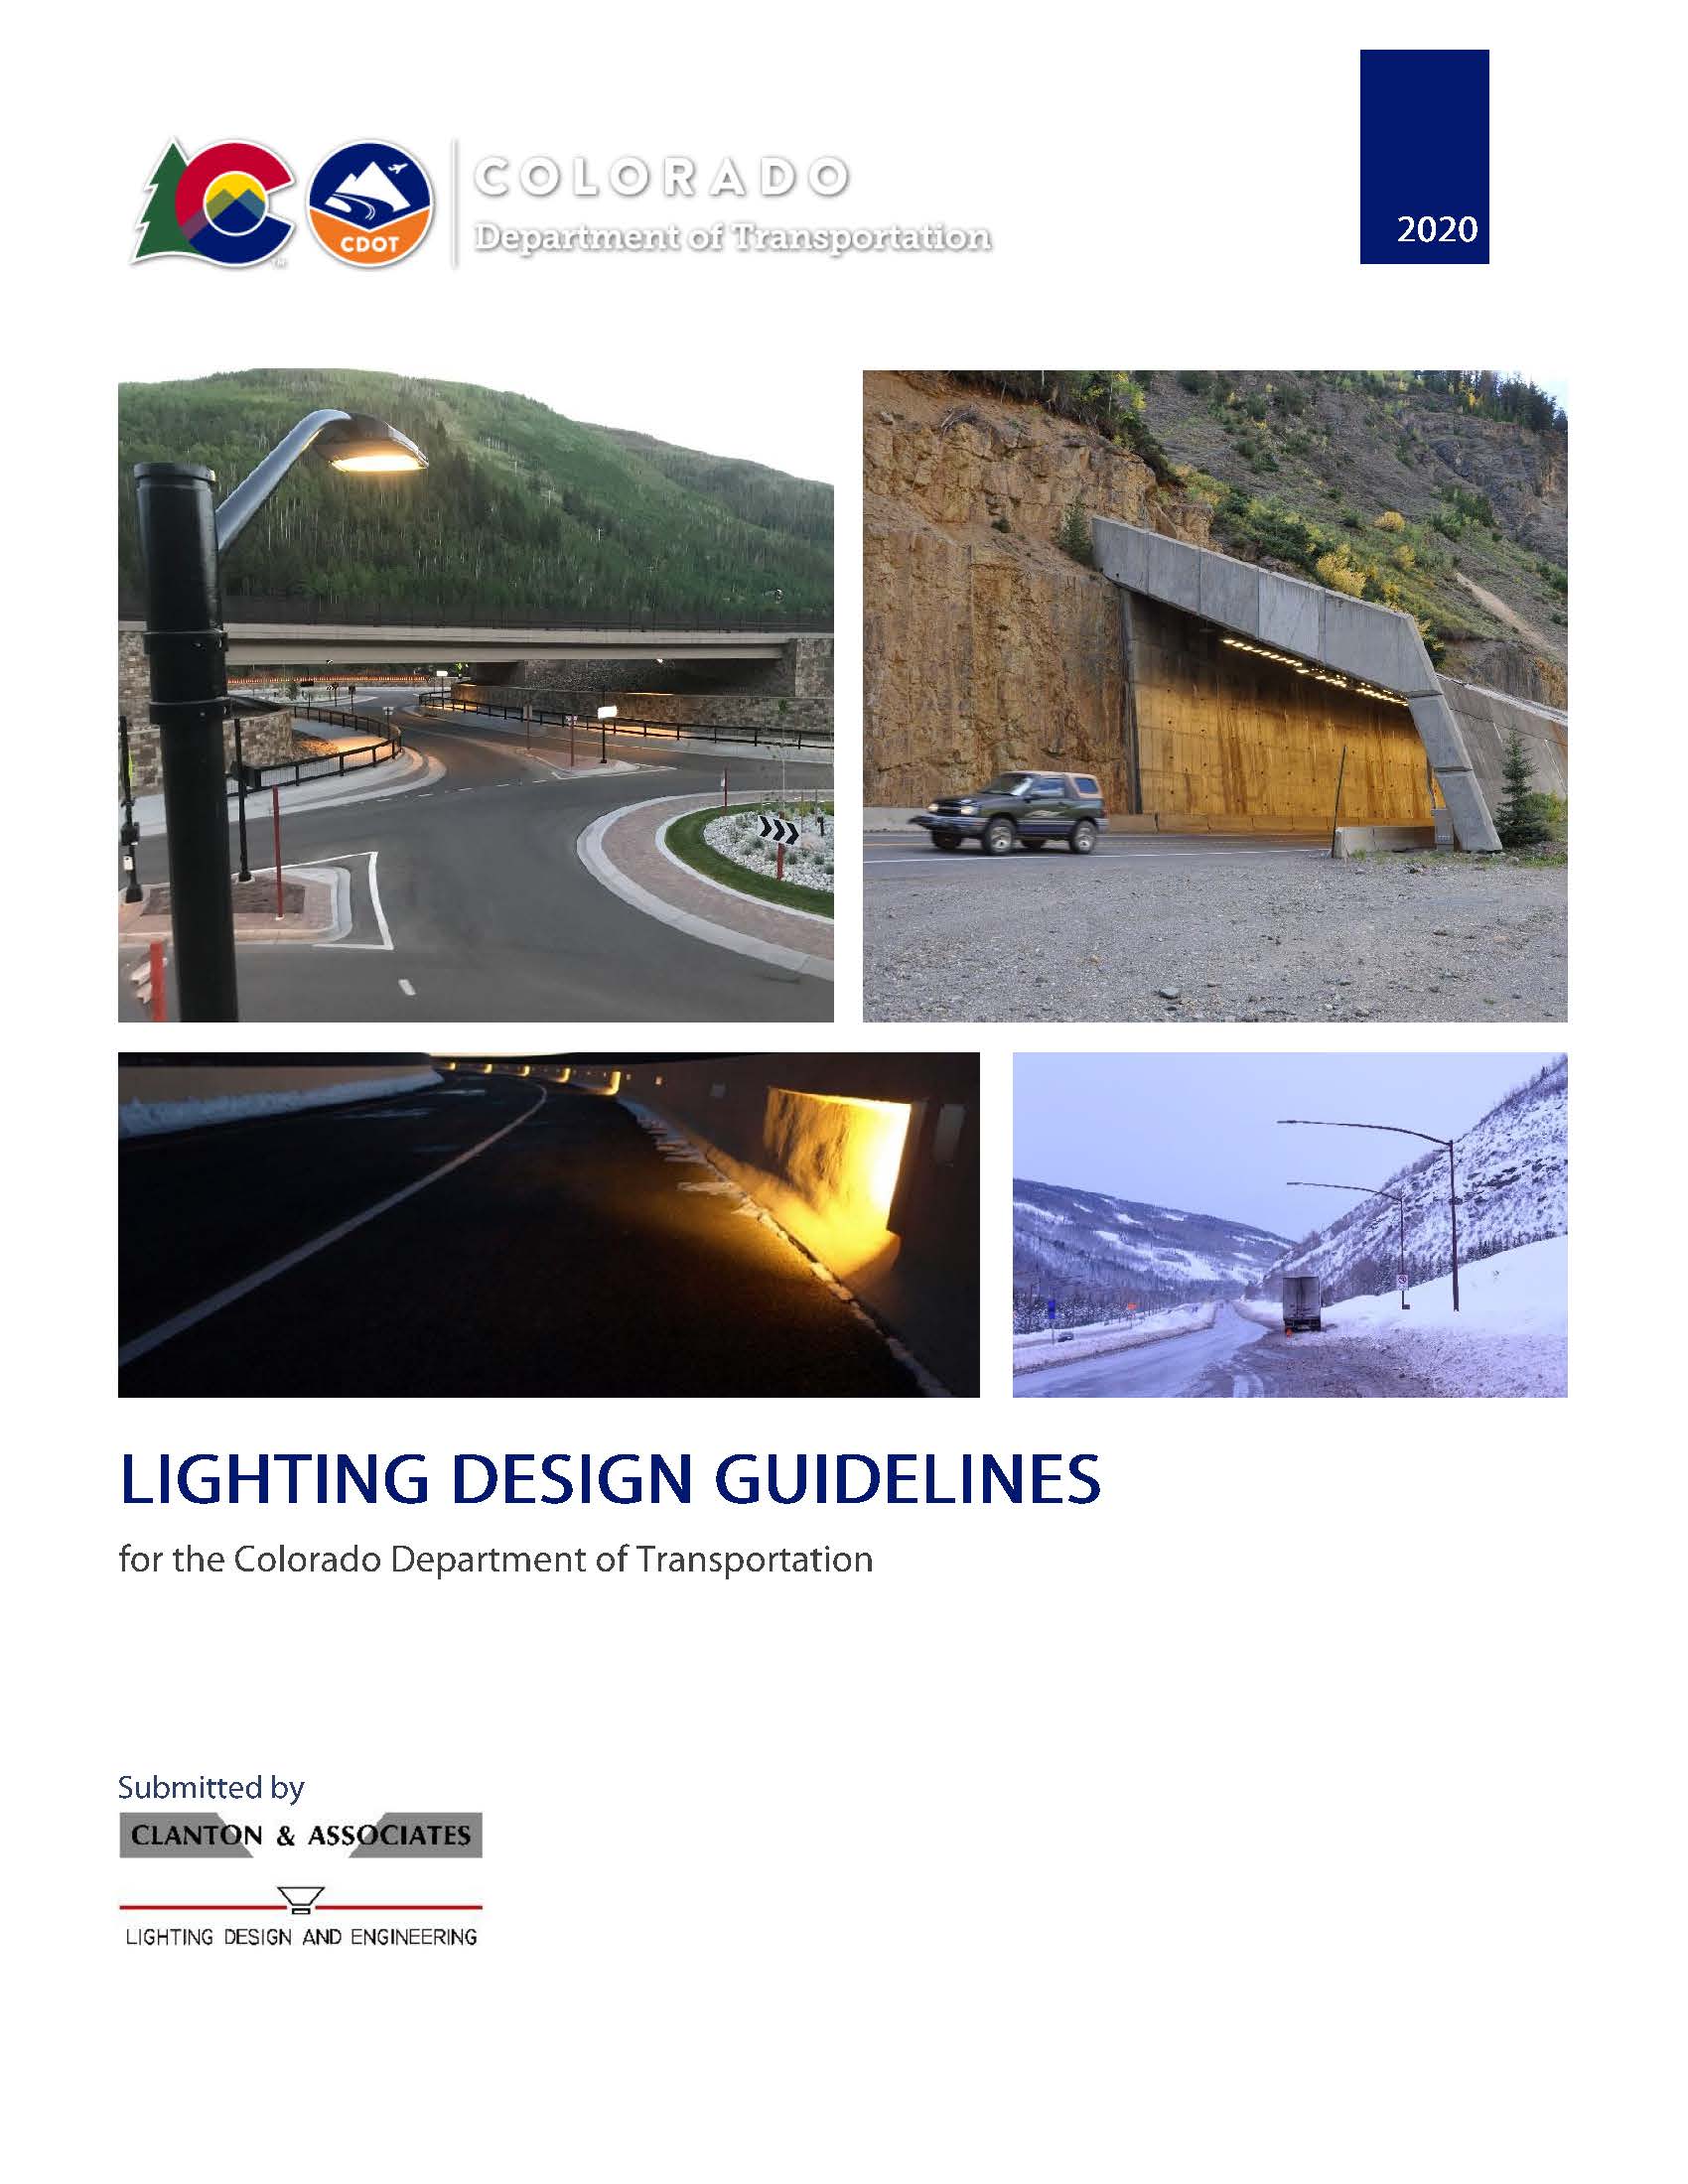 Lighting Design Guidelines detail image